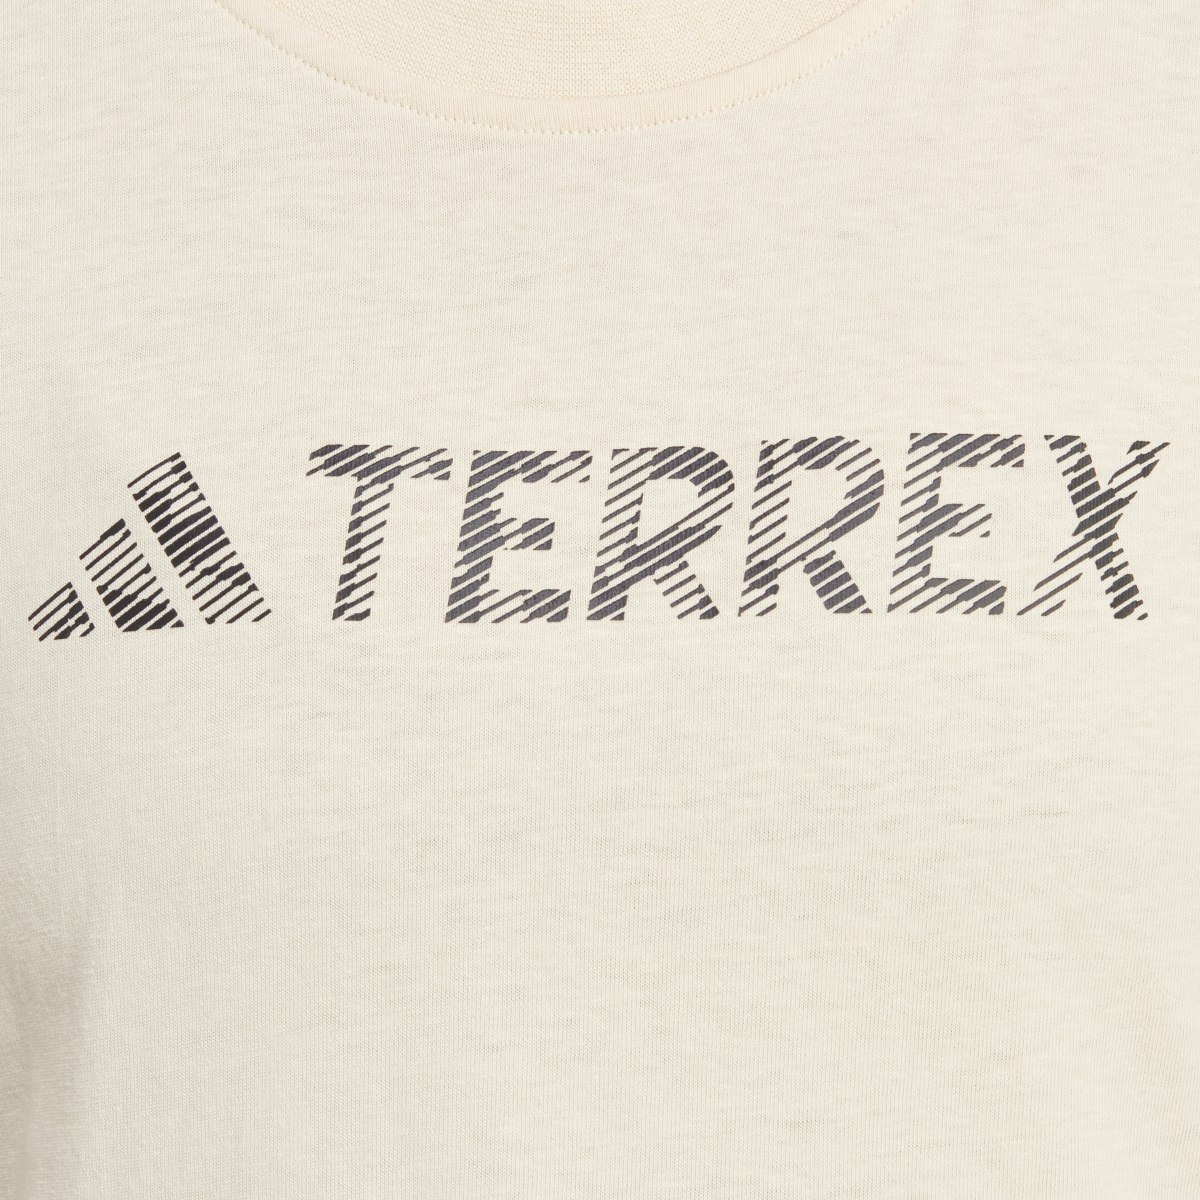 Adidas Terrex Classic Logo T-Shirt. 6